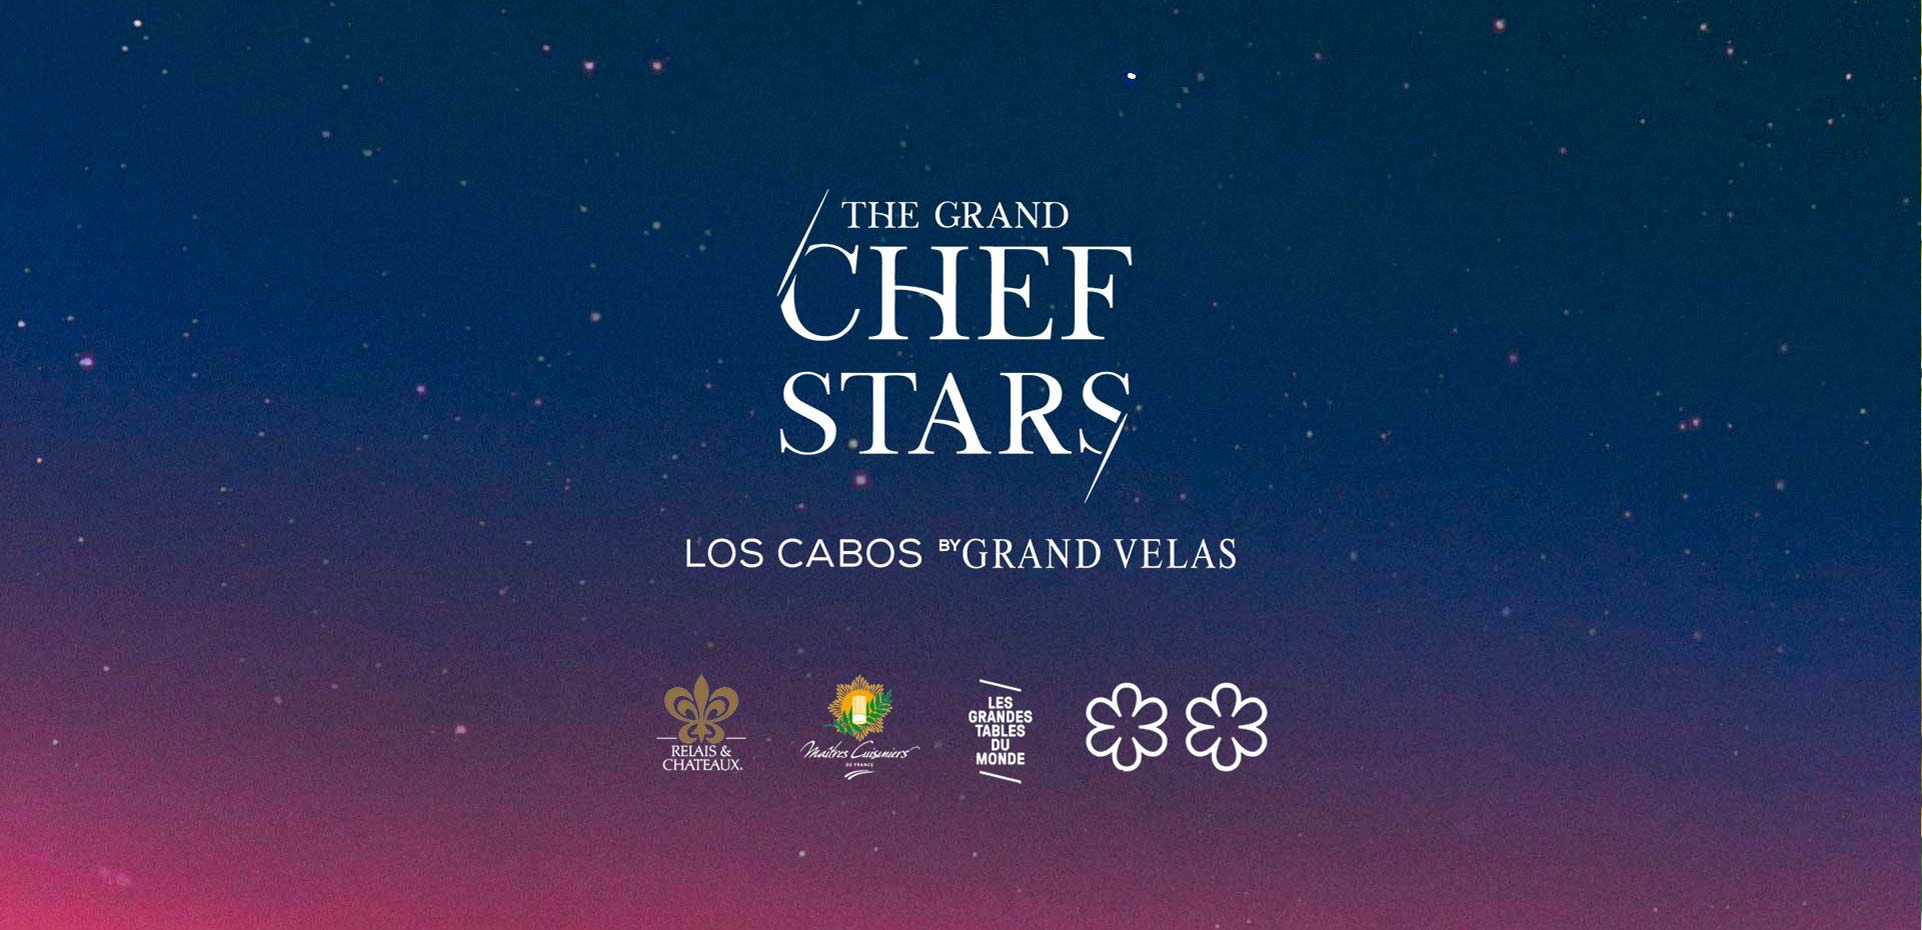 The Grand Chef Stars